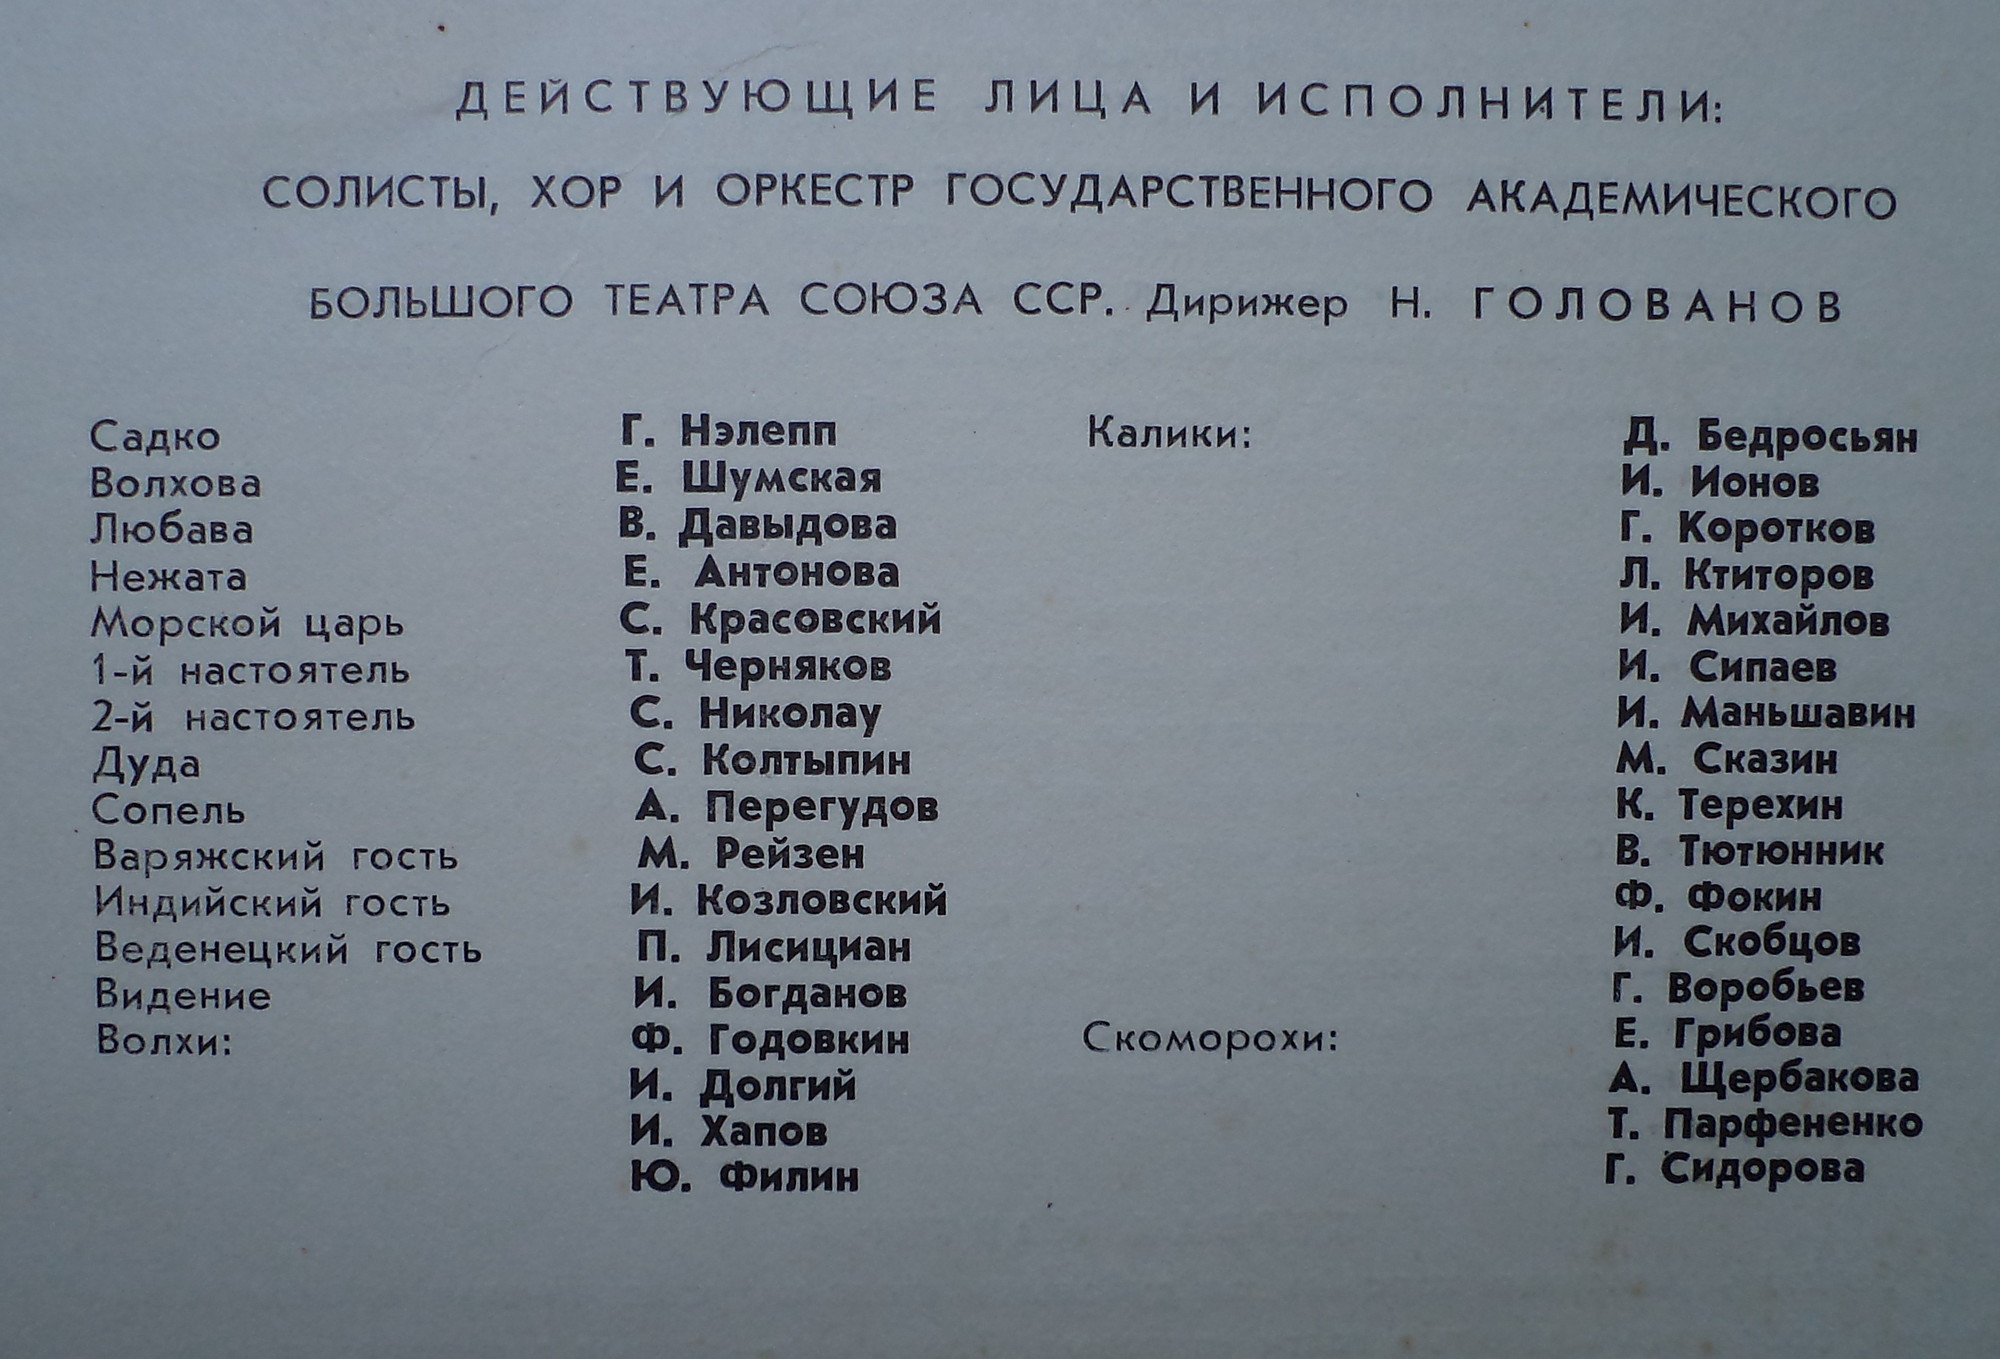 Н. Римский-Корсаков (1844-1908). Опера-былина "Садко"